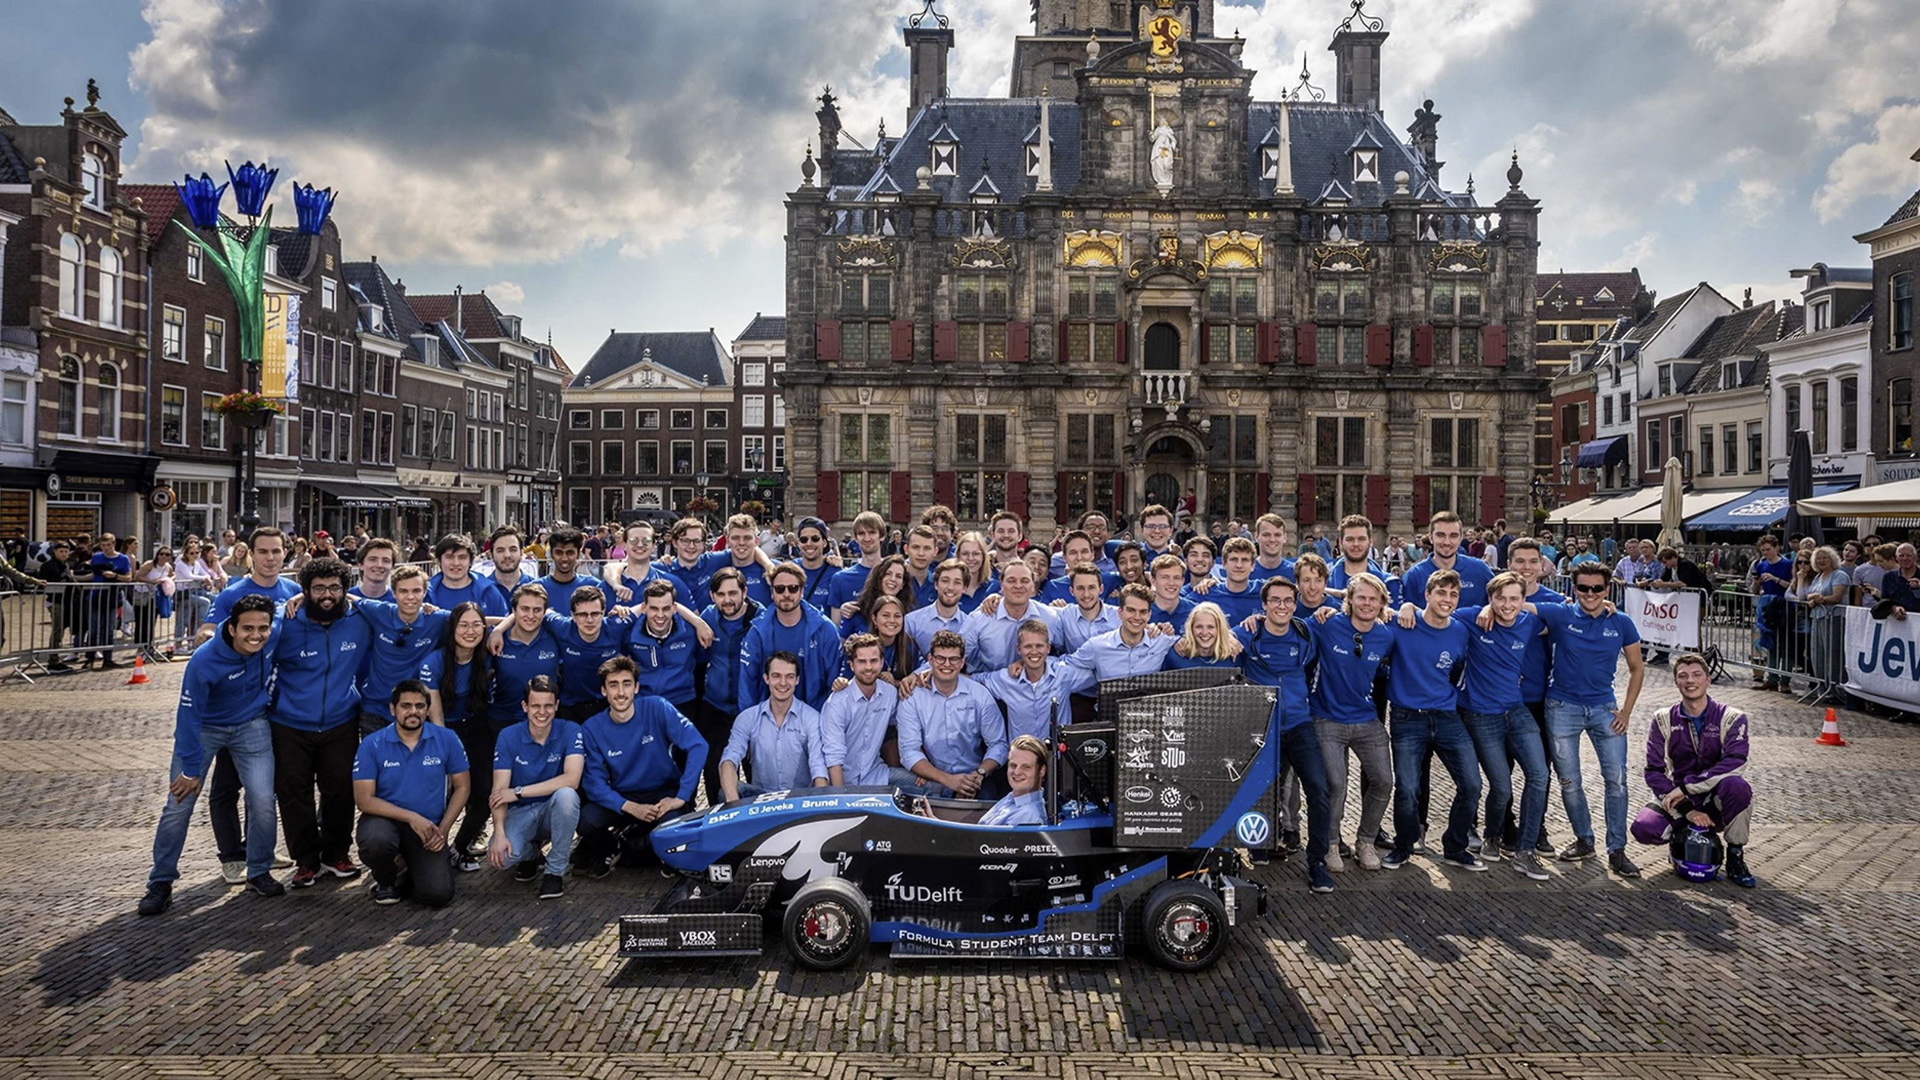 The TU Delft team with their Formula-style racecar